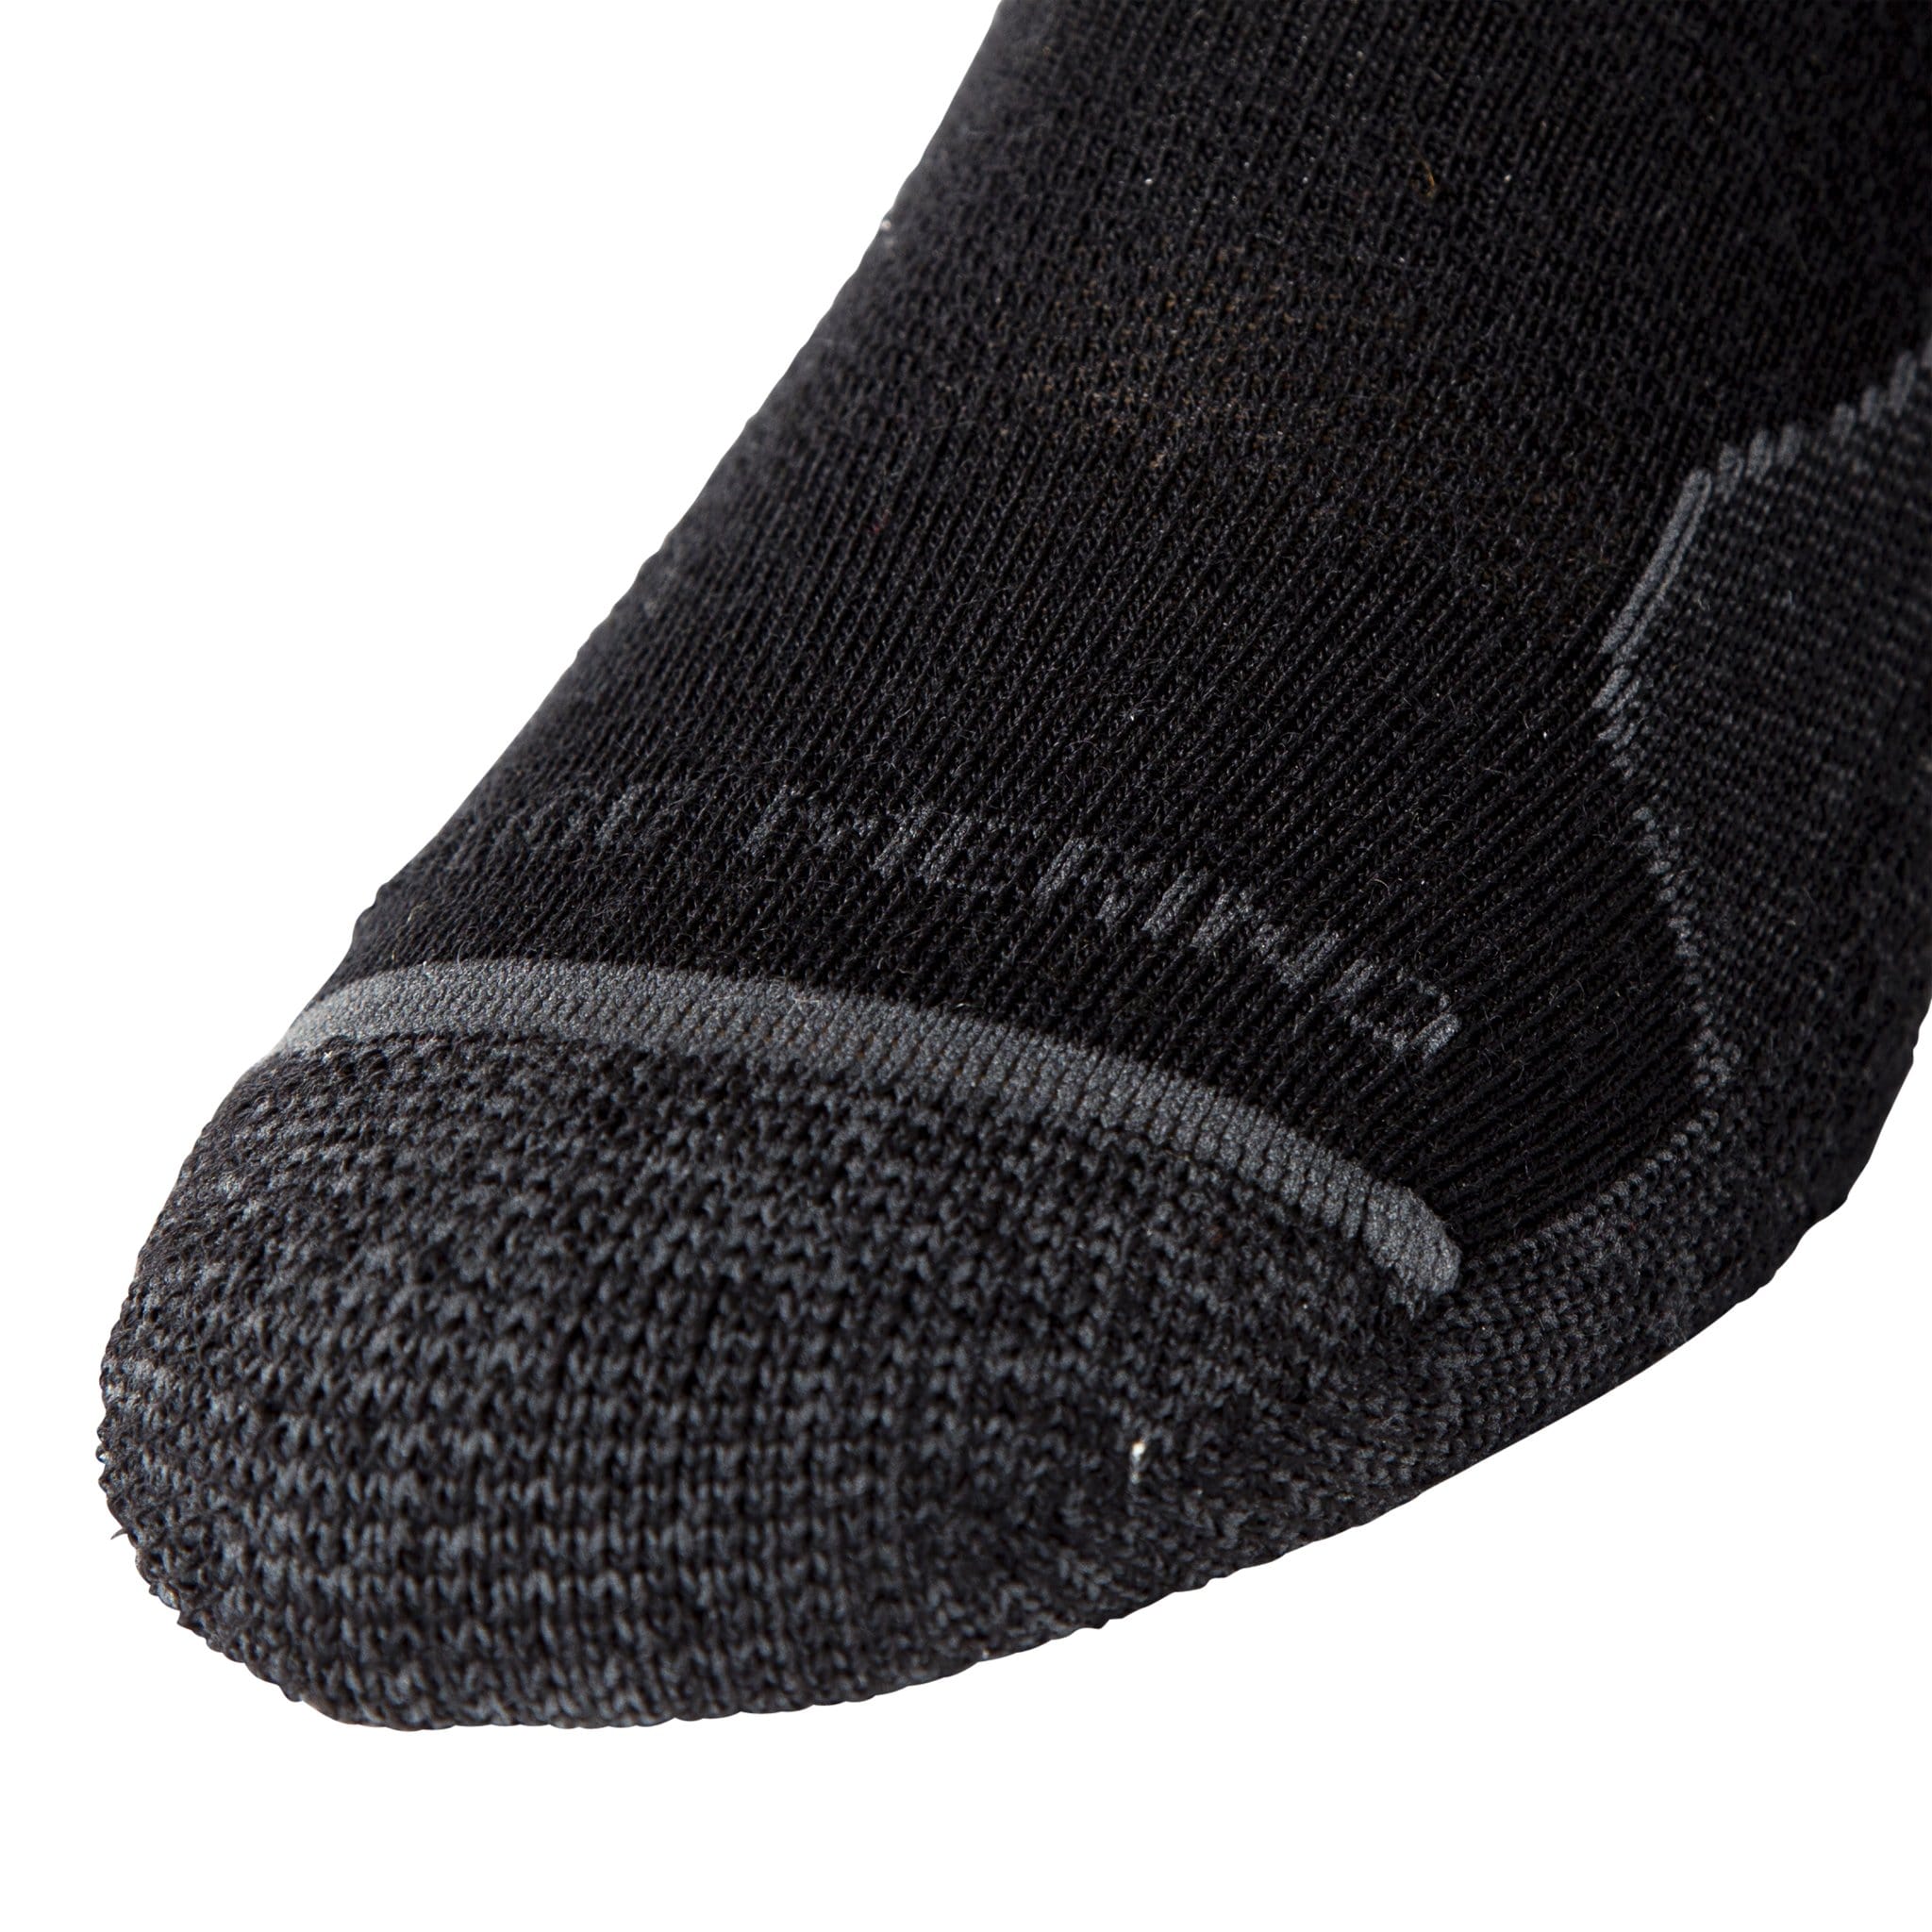 Dropout Lightweight Merino Wool Ski Socks